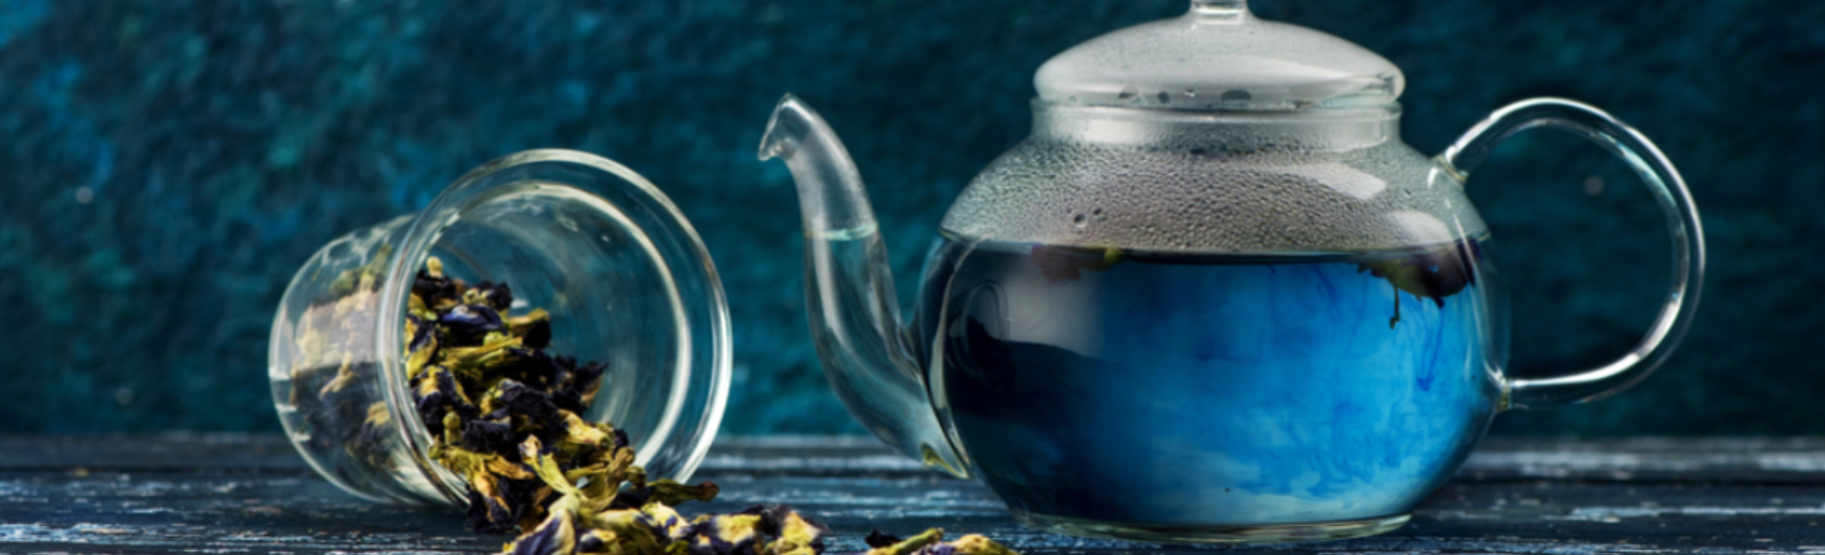 Blue Tea - Blue Tea COMBOS : Get Upto 70% OFF